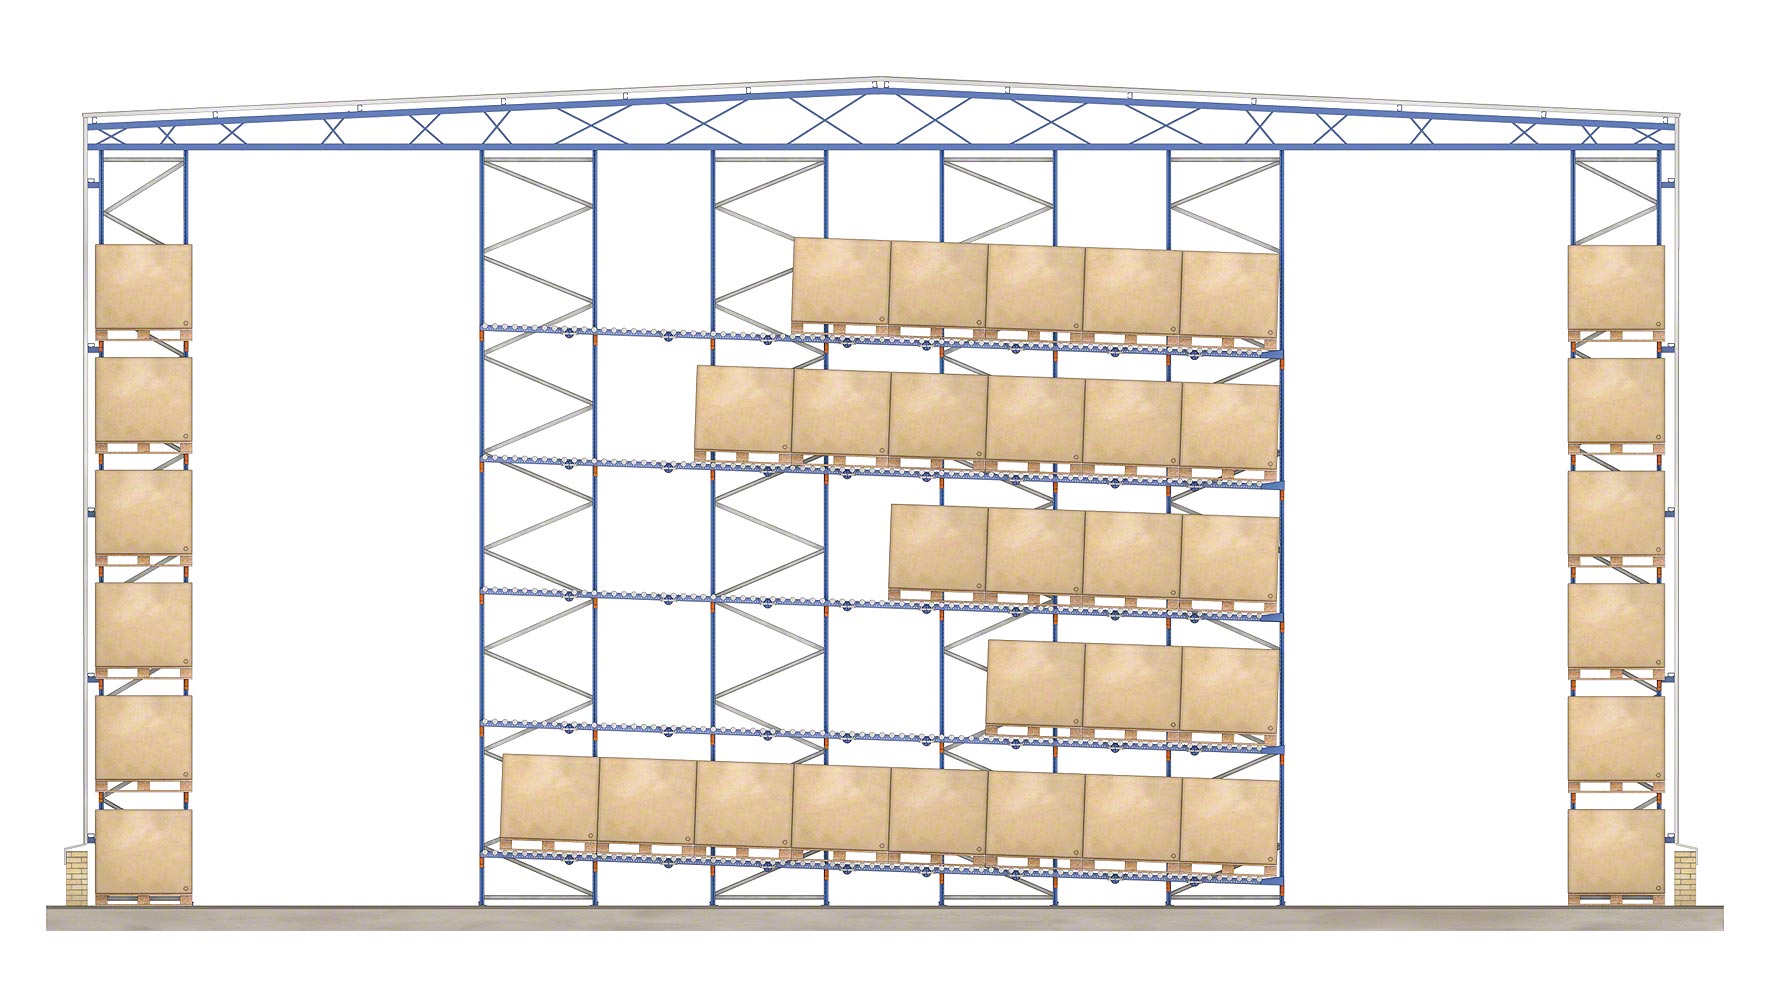 Clad-rack warehouses